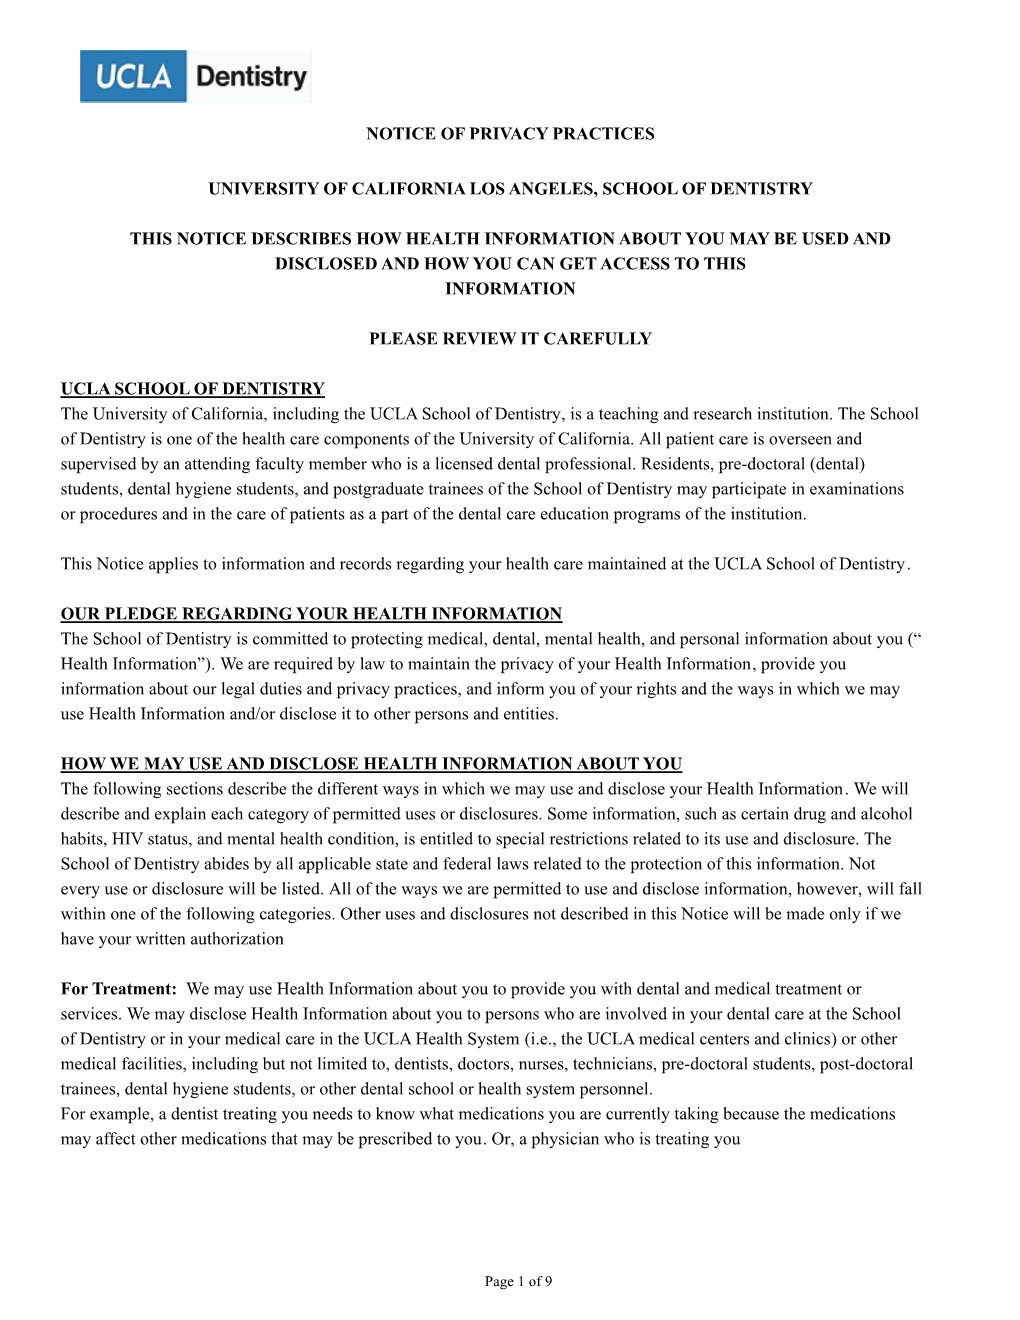 Notice of Privacy Practices University of California Los